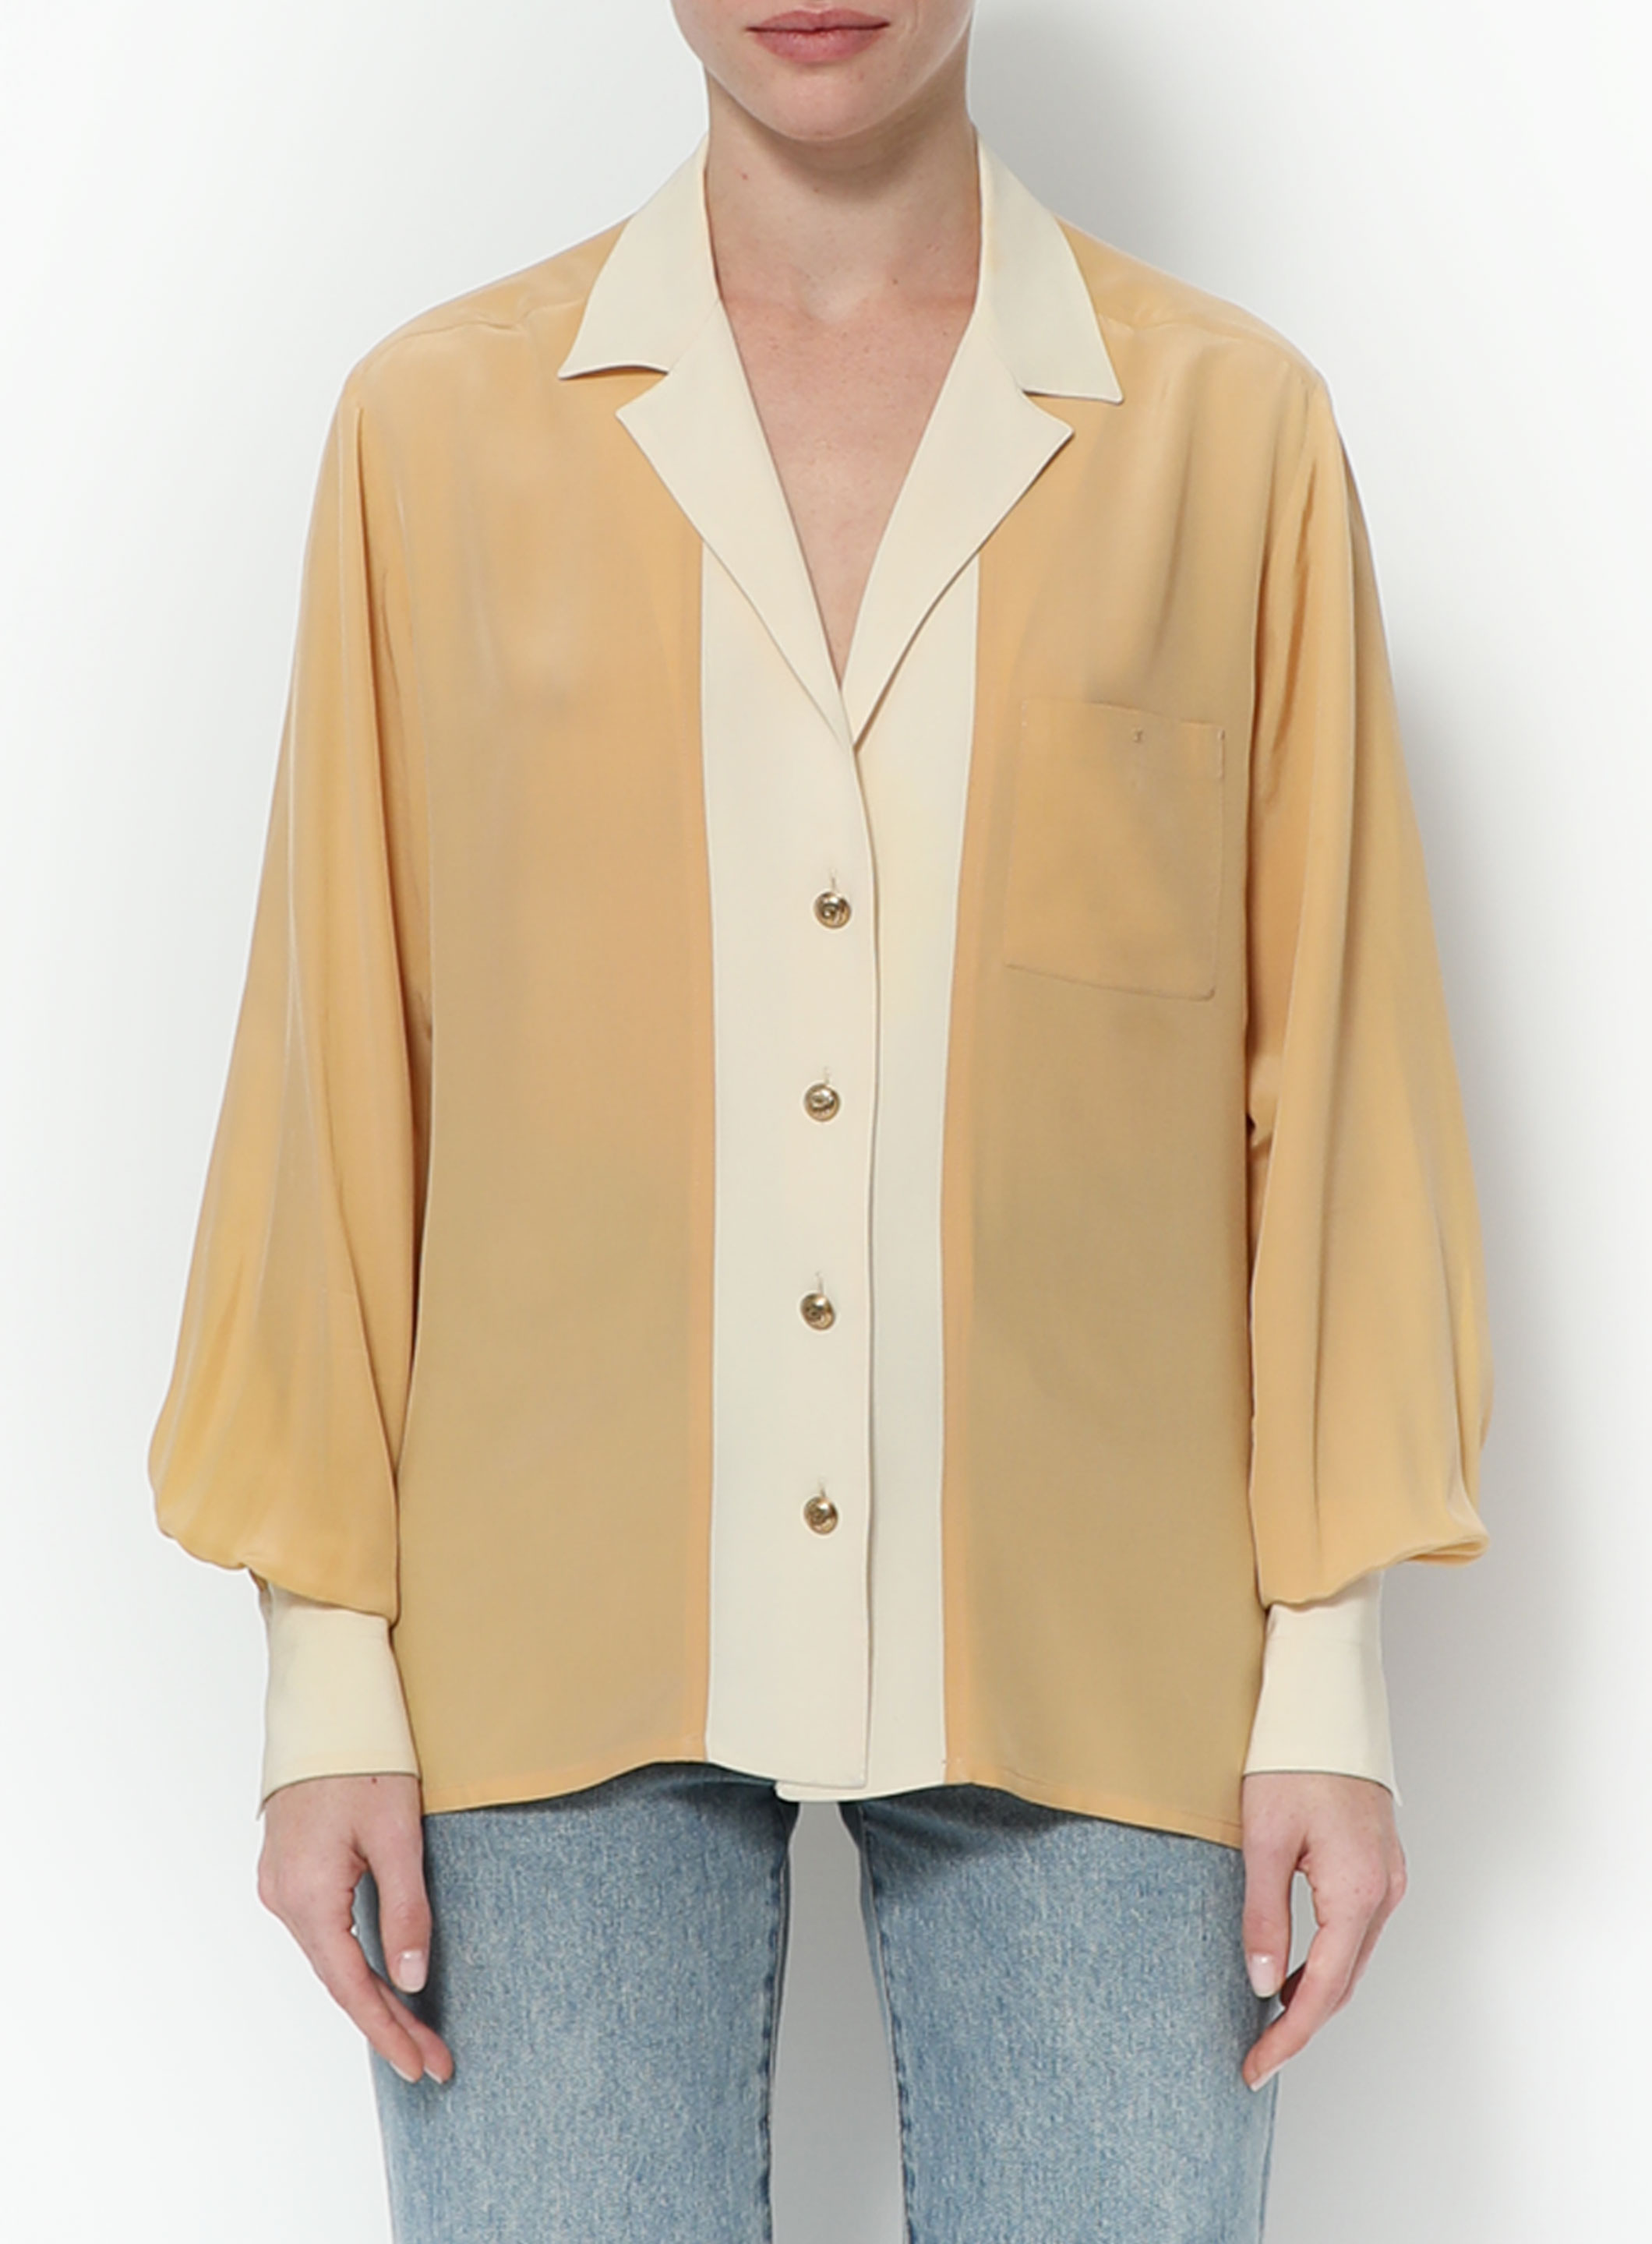 vintage chanel blouse